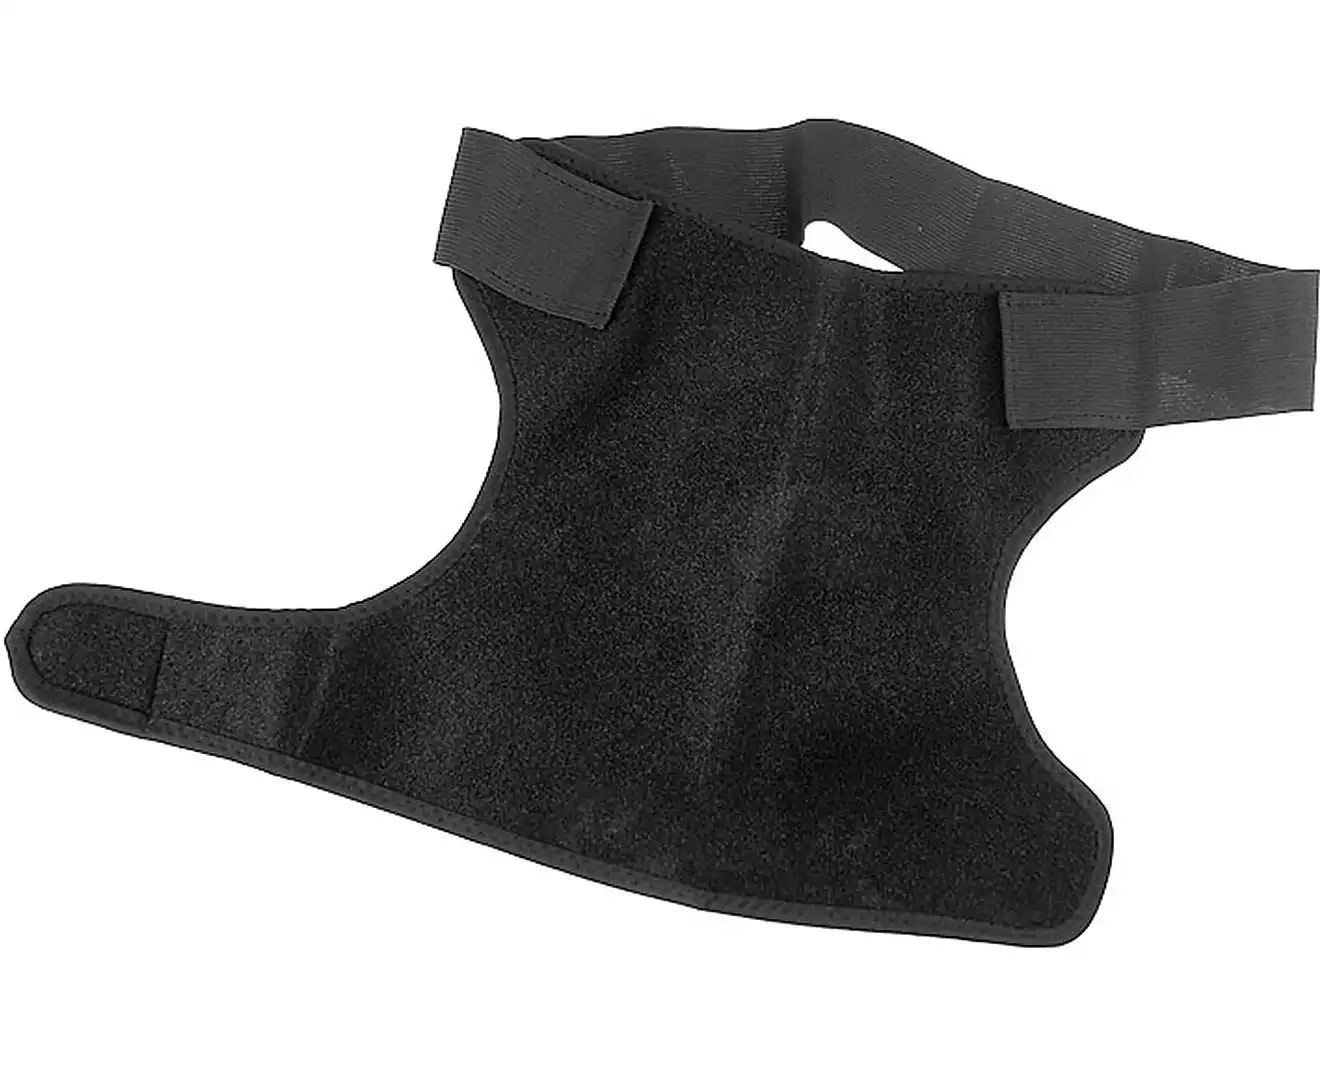 Shoulder Compression Bandage Sports Support Protector Brace Strap Wrap - Small